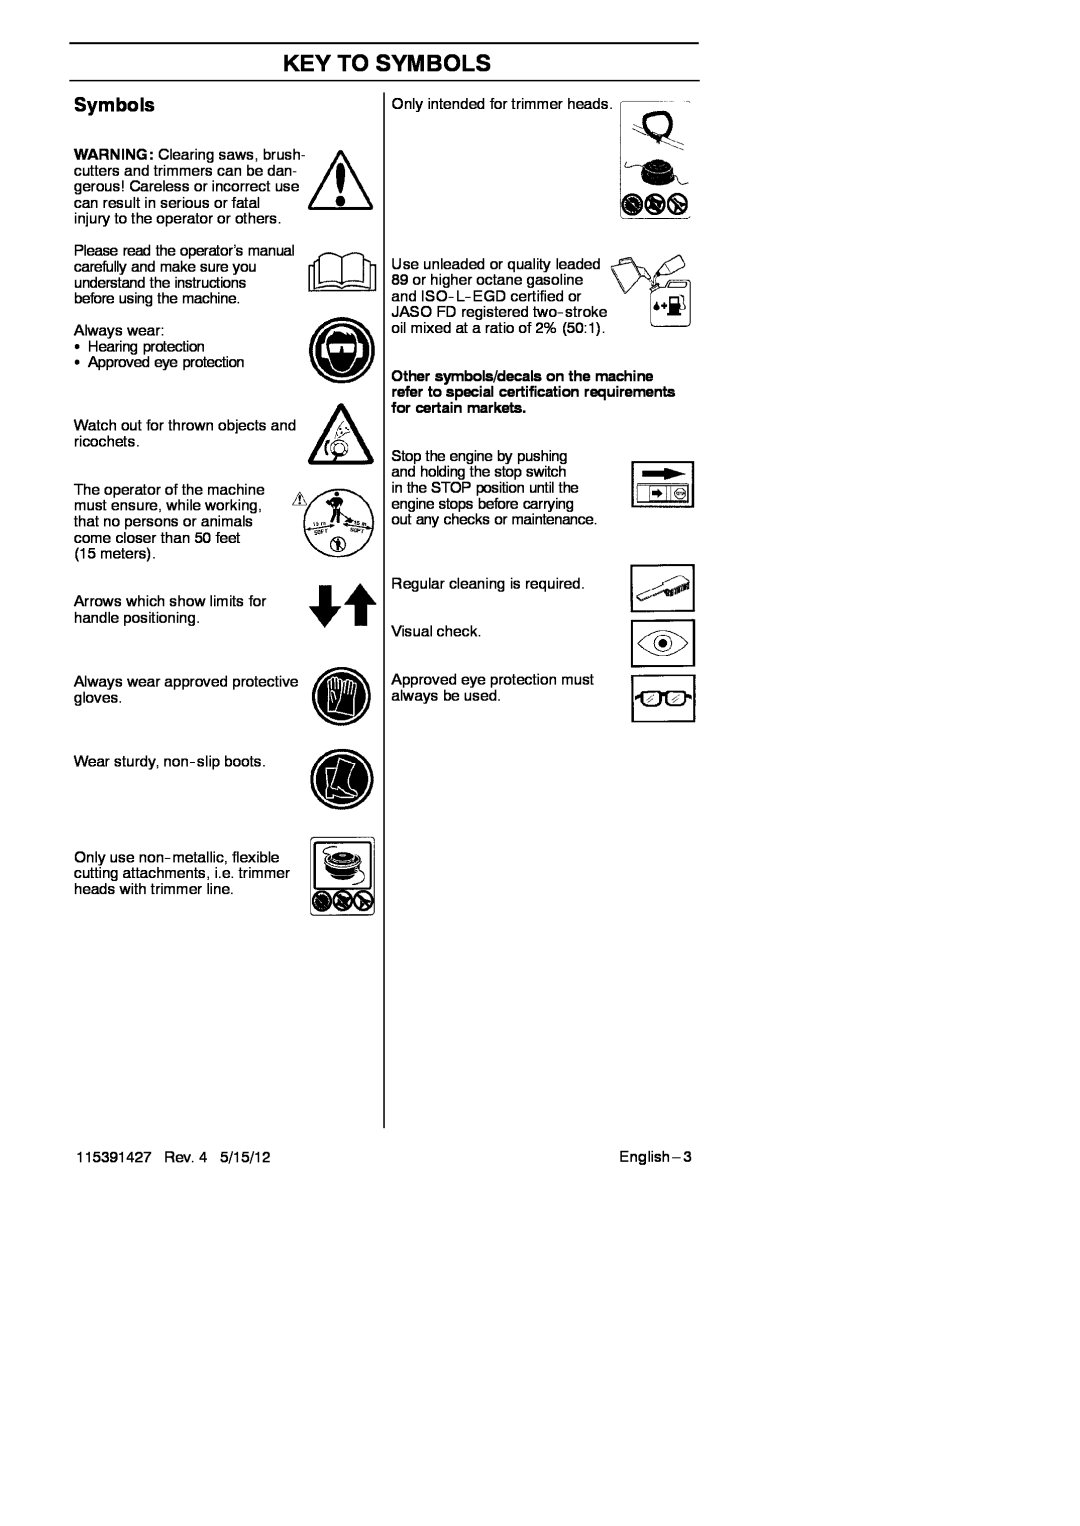 RedMax BT280 manual Key To Symbols 